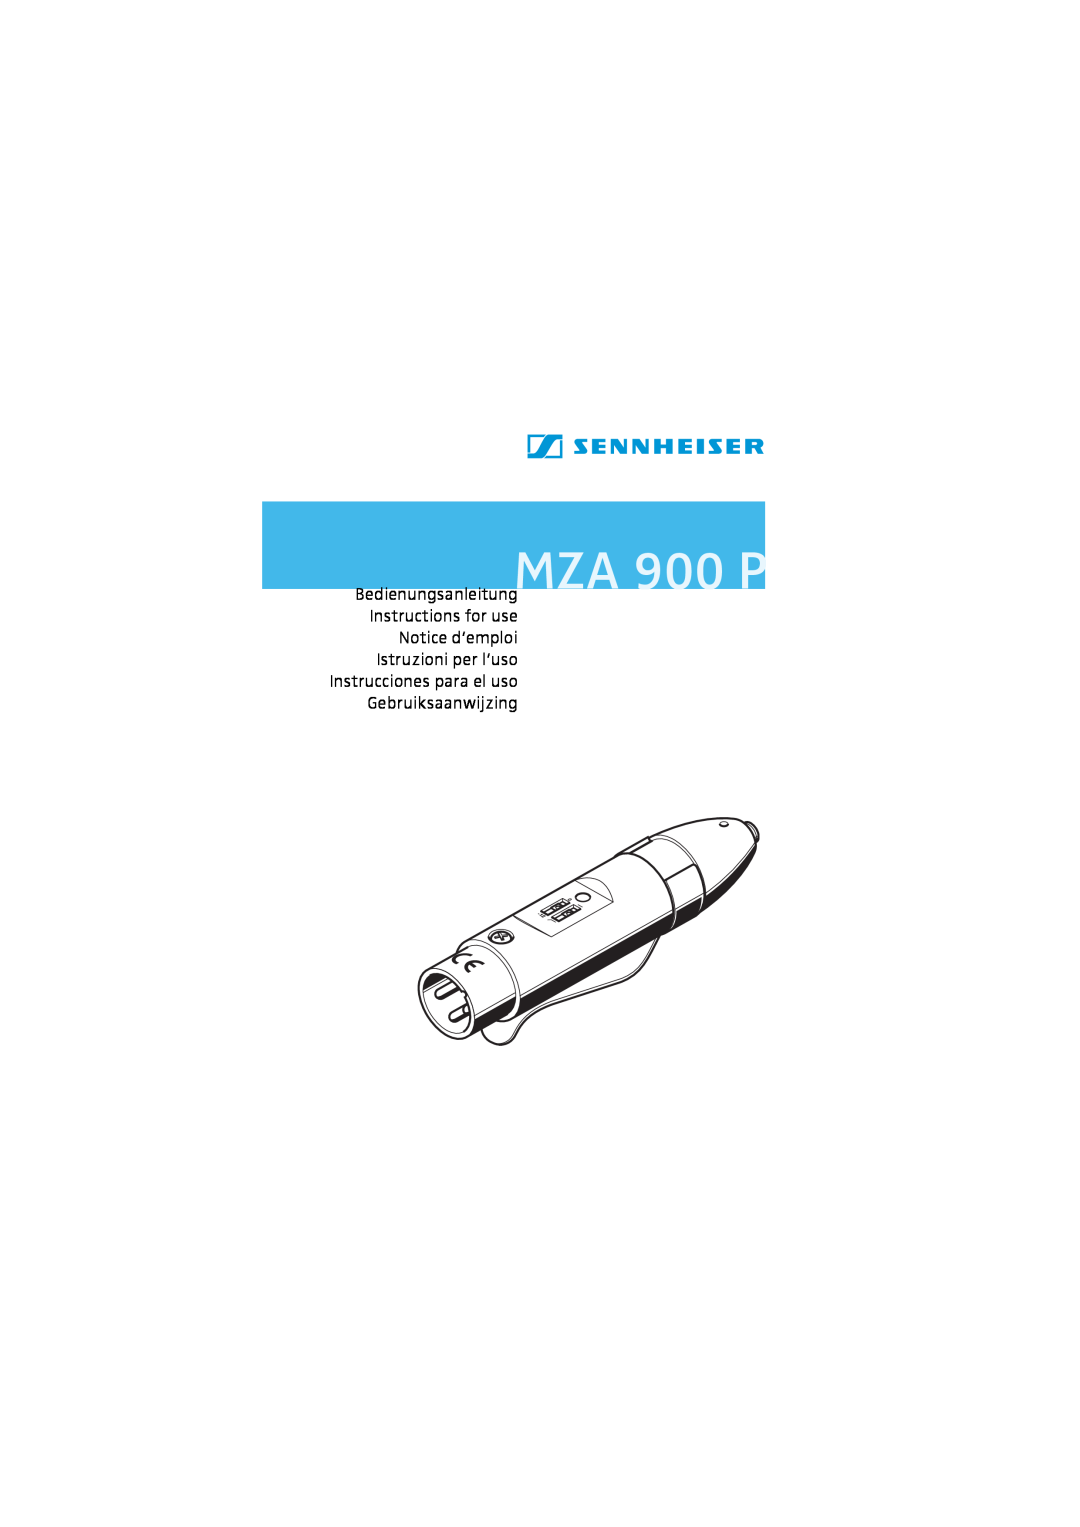 Sennheiser manual BedienungsanleitungMZA 900 P Instructions for use 